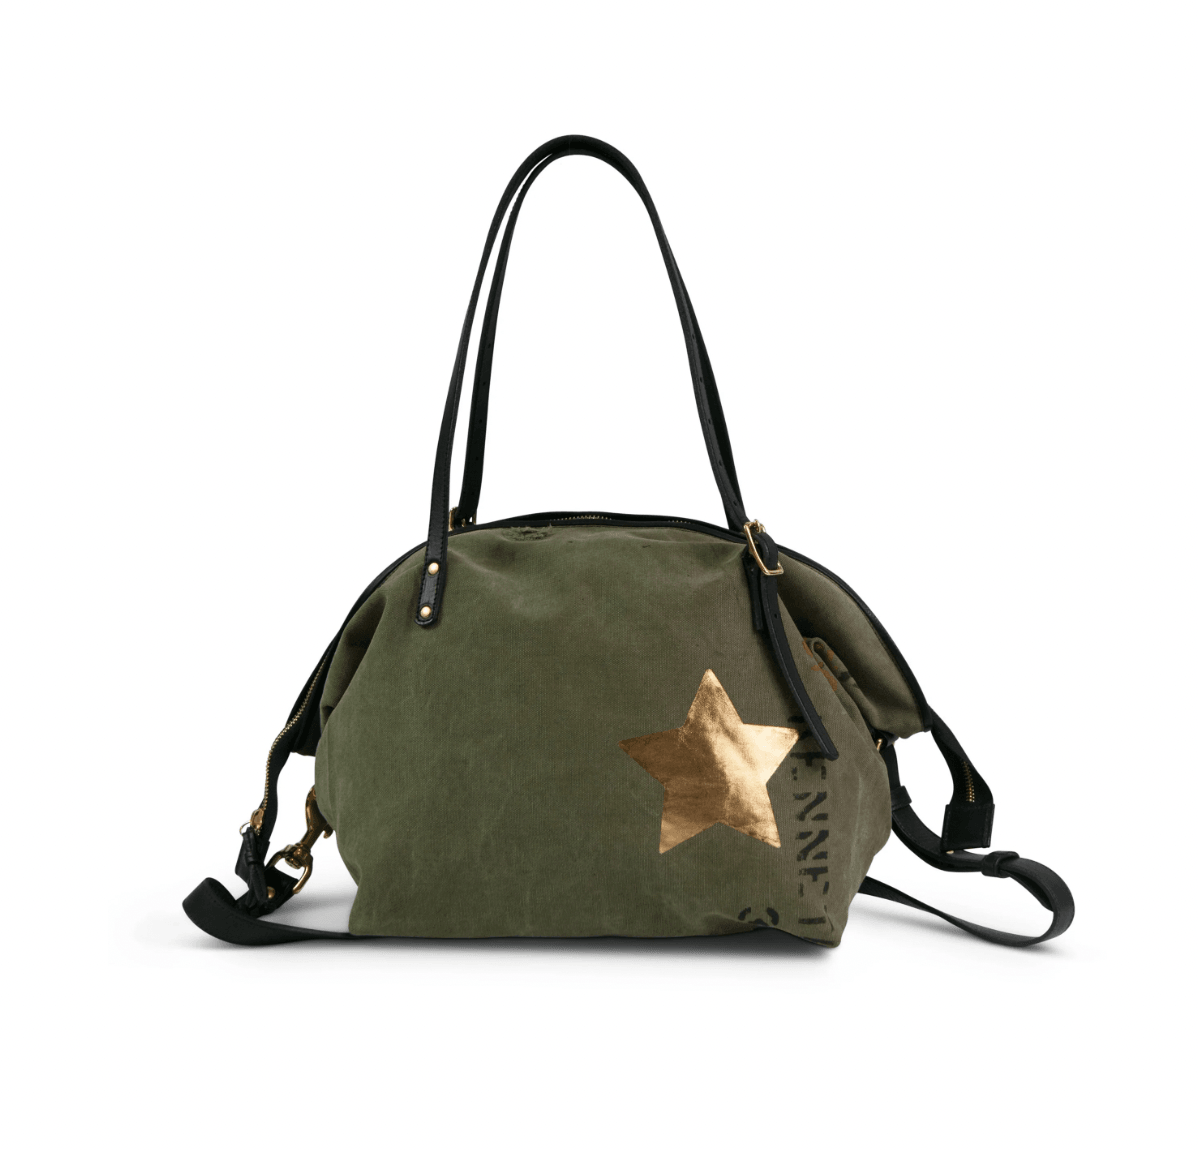 Army Star Canvas Crossbody Bag by Kempton & Co.